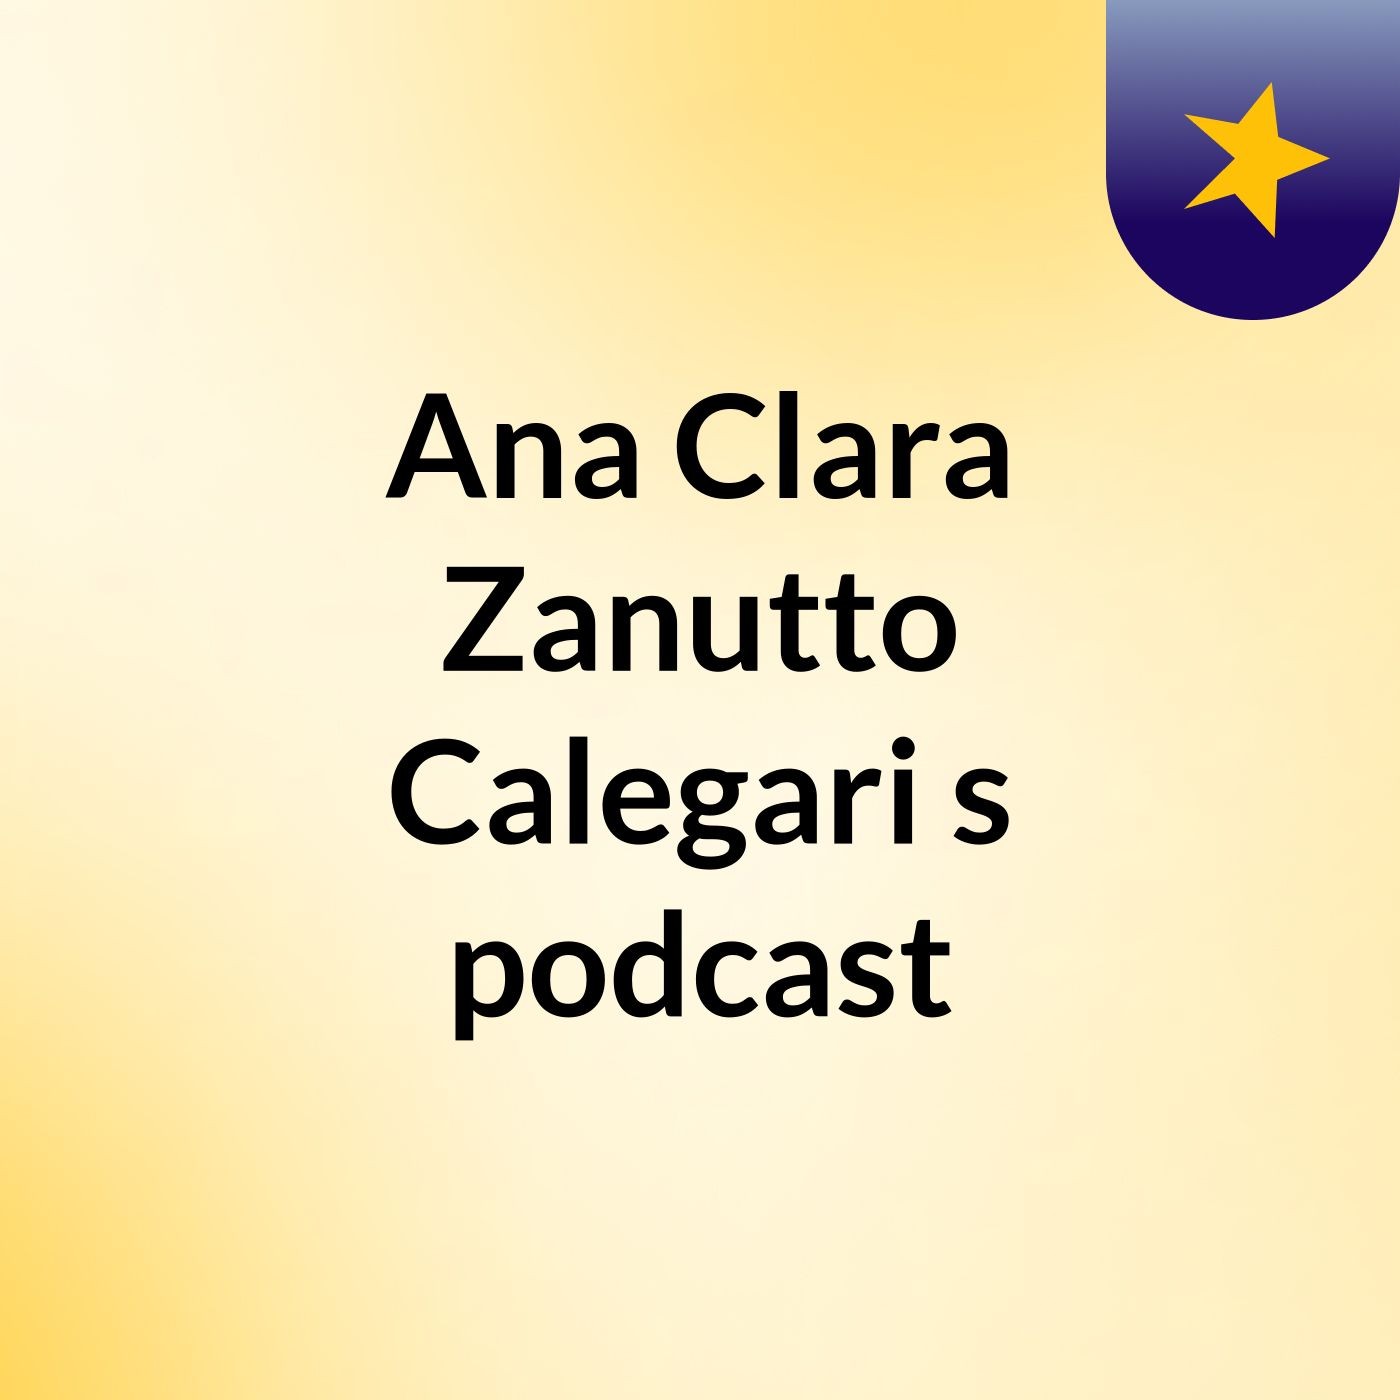 Ana Clara Zanutto Calegari's podcast